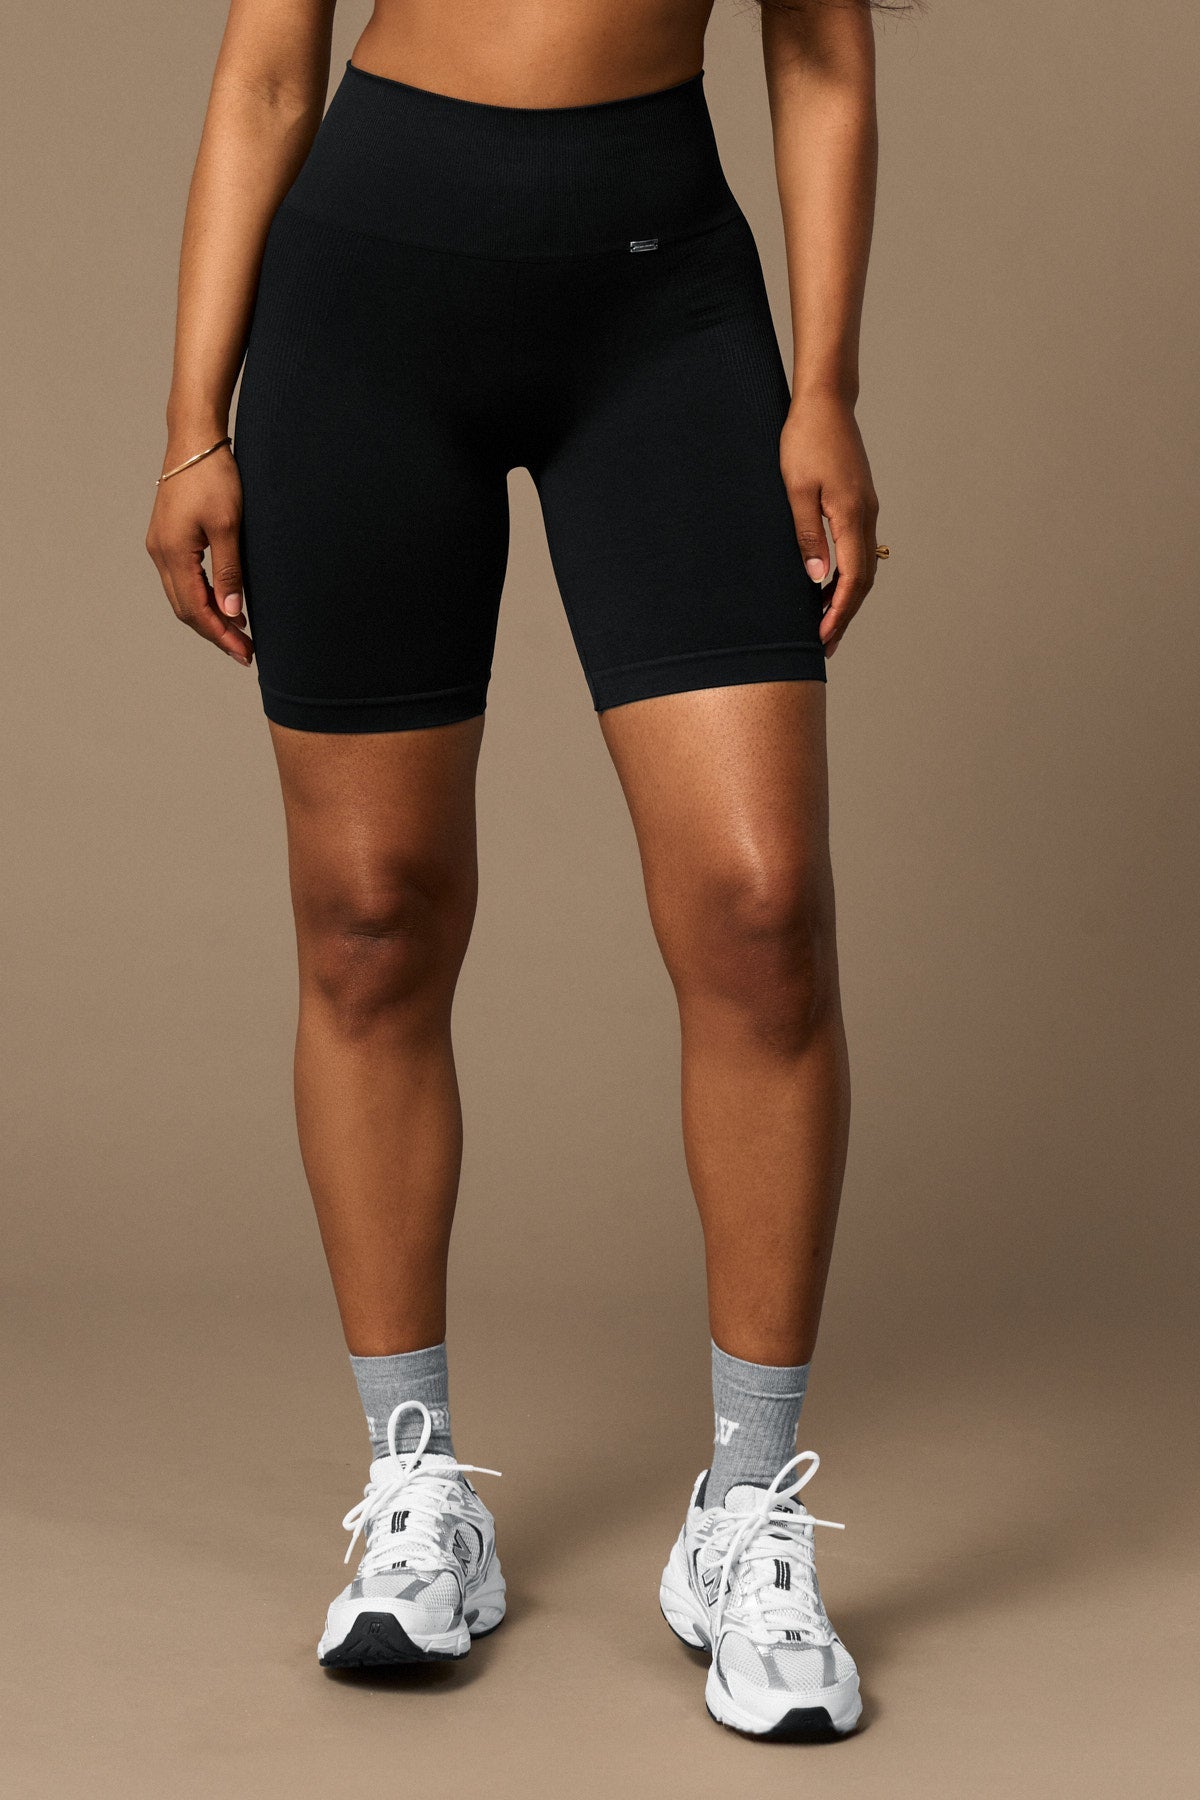 Bliss Biker en Negro-Bikers-Tienda Ropa Leggings Yoga Sostenibles Reciclados Mujer On-line Barcelona Believe Athletics Sustainable Recycled Yoga Clothes